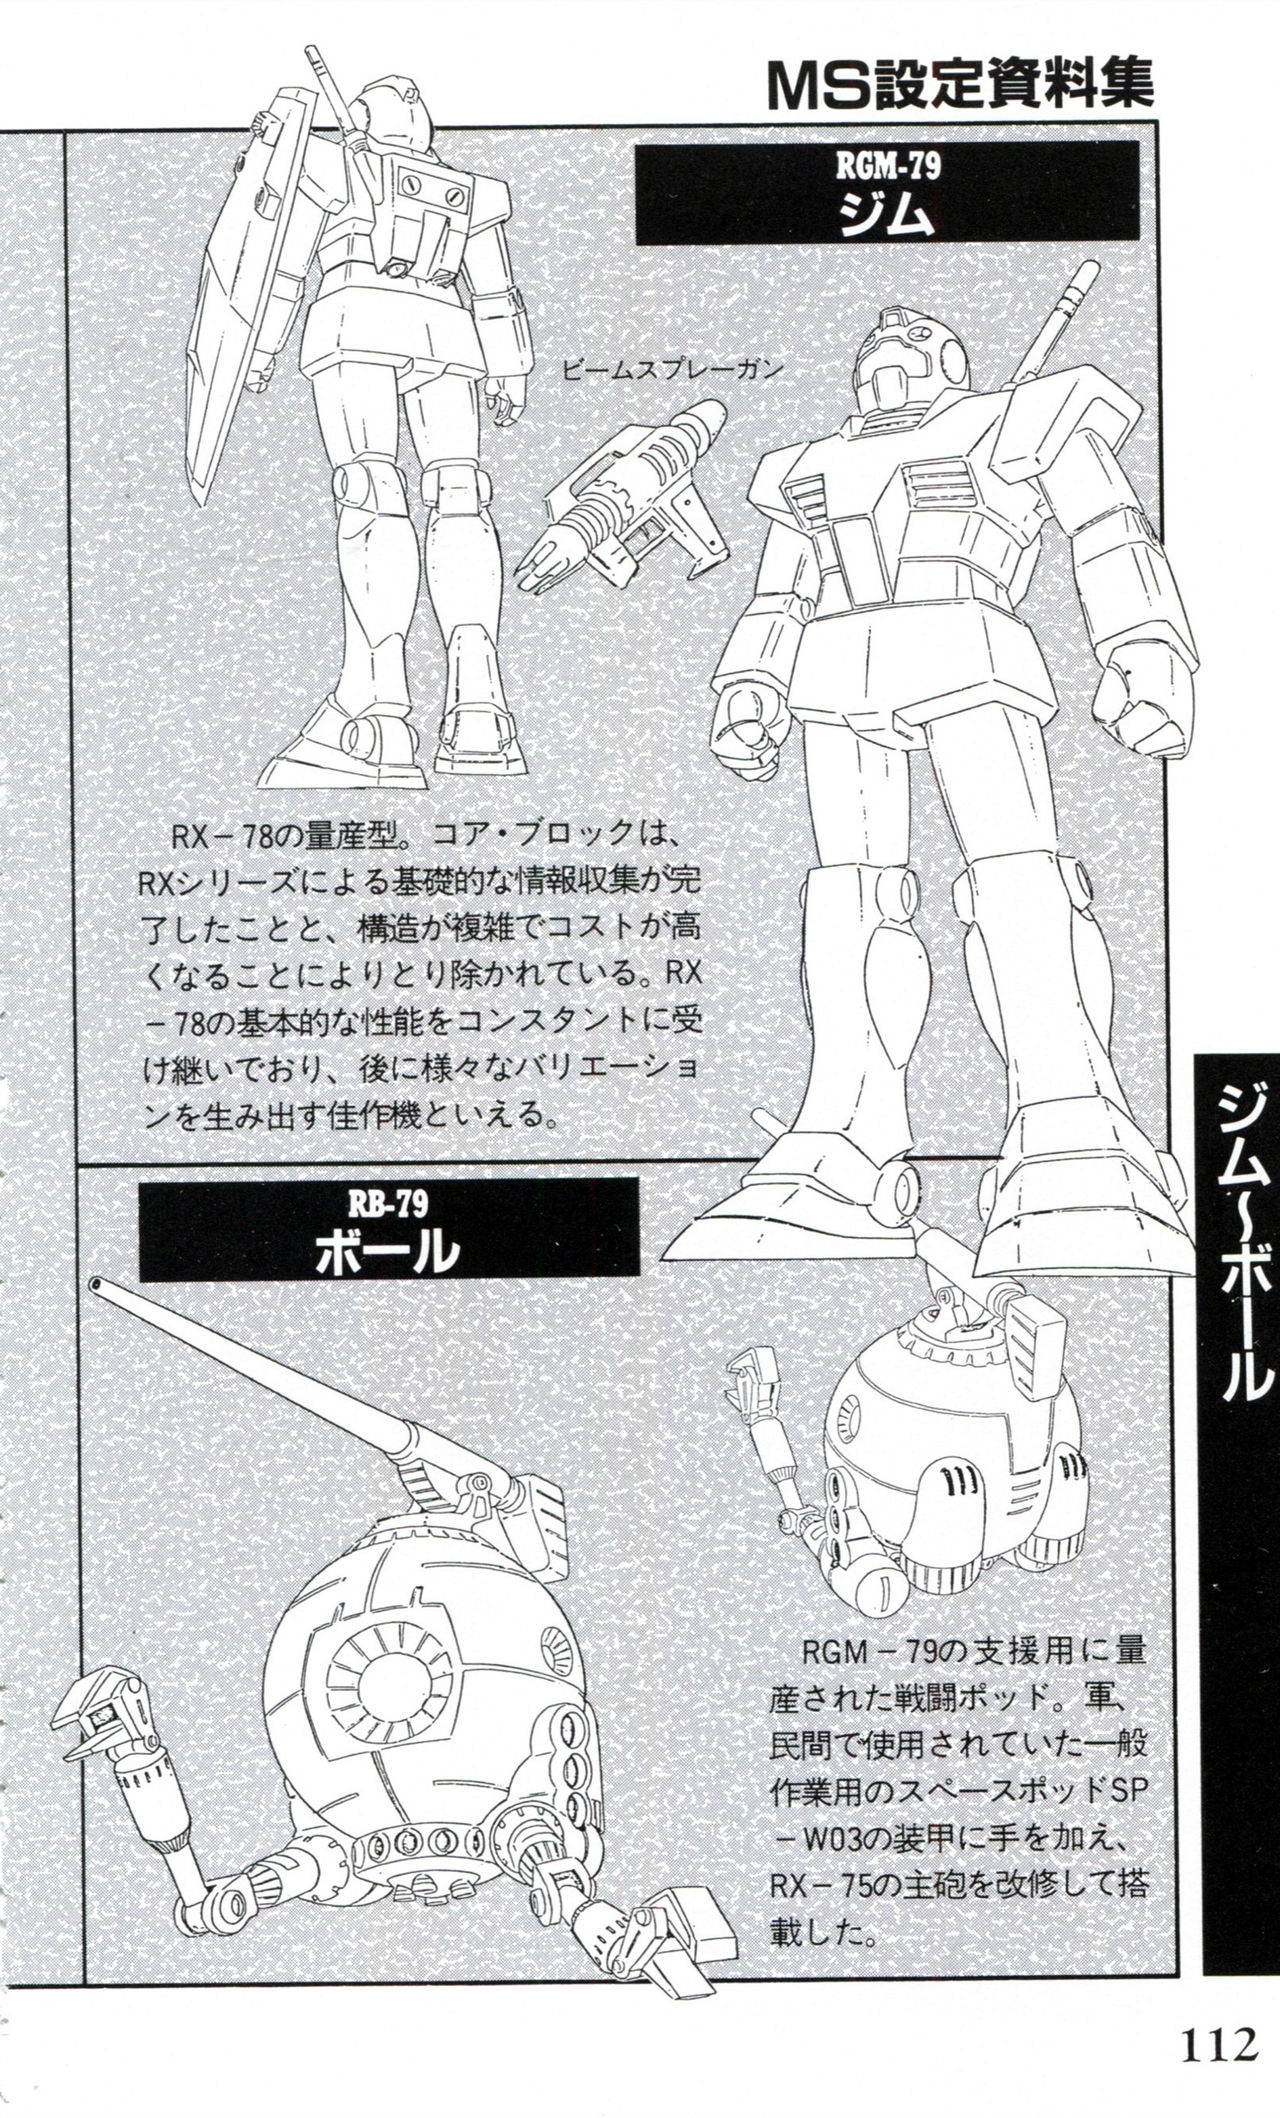 Mobile Suit Gundam U.C. Box MS Gundam Encyclopedia NO.01 - Mobile Suit Gundam 111